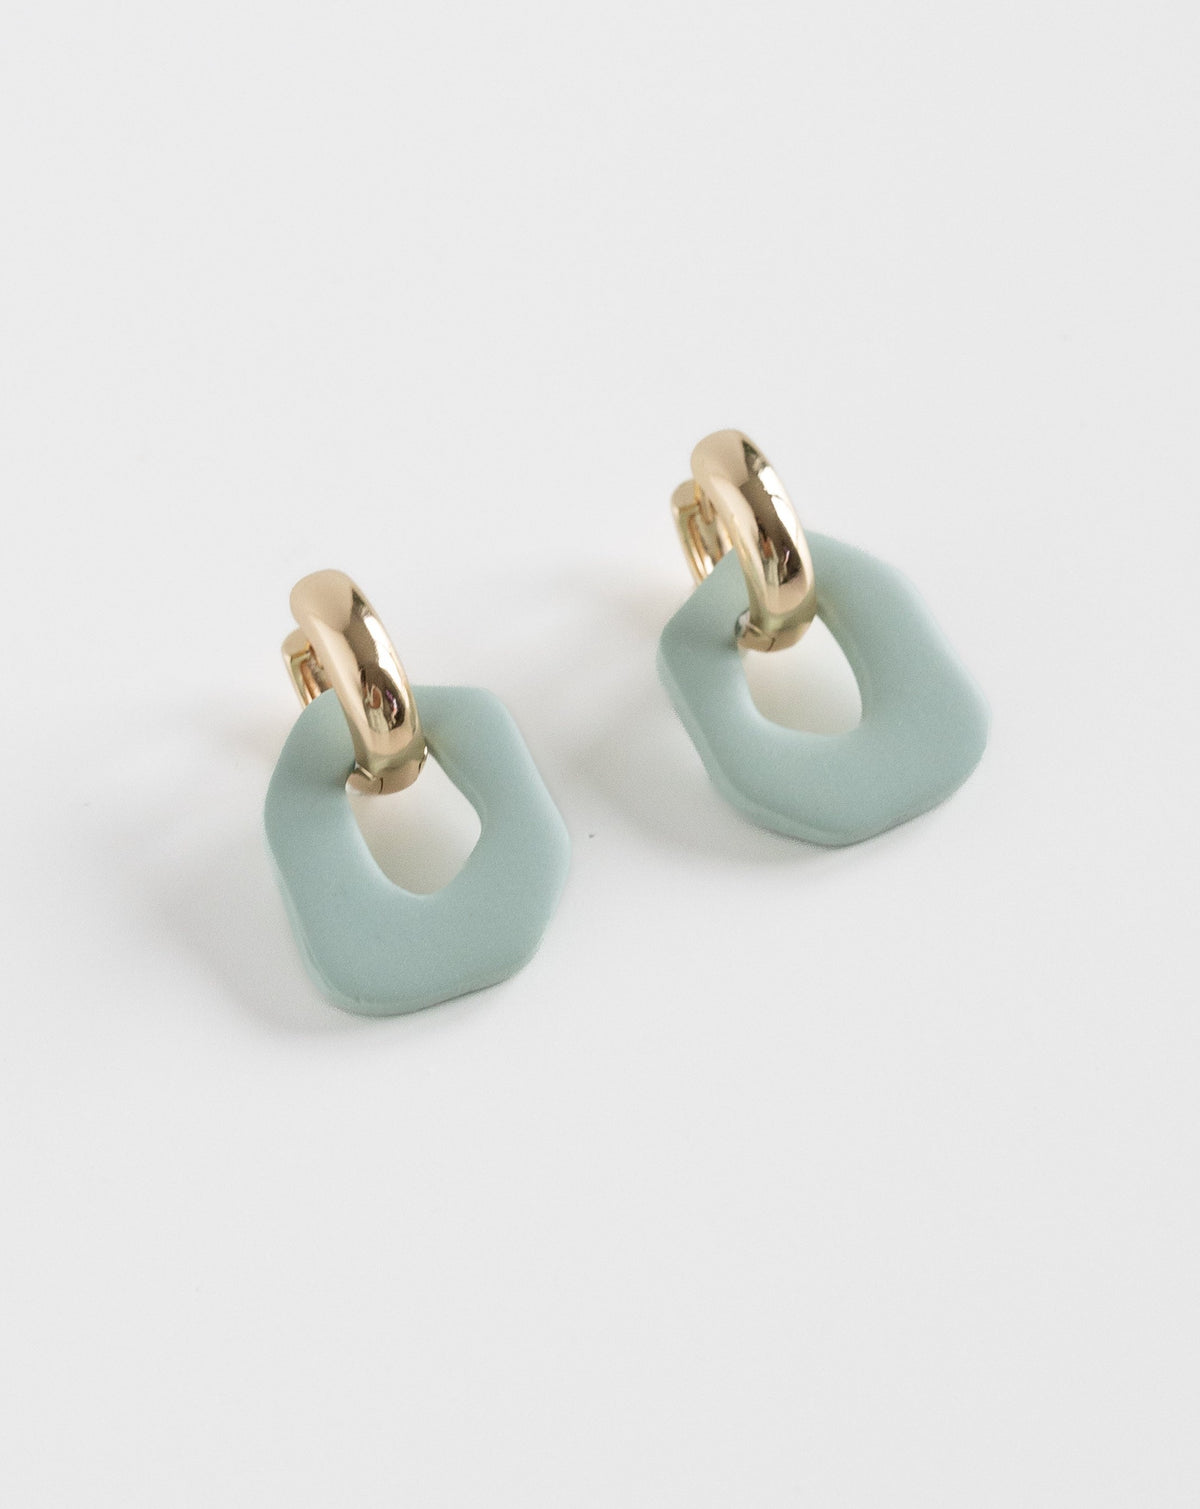 Darien earrings in Sage color with gold hoops, side view